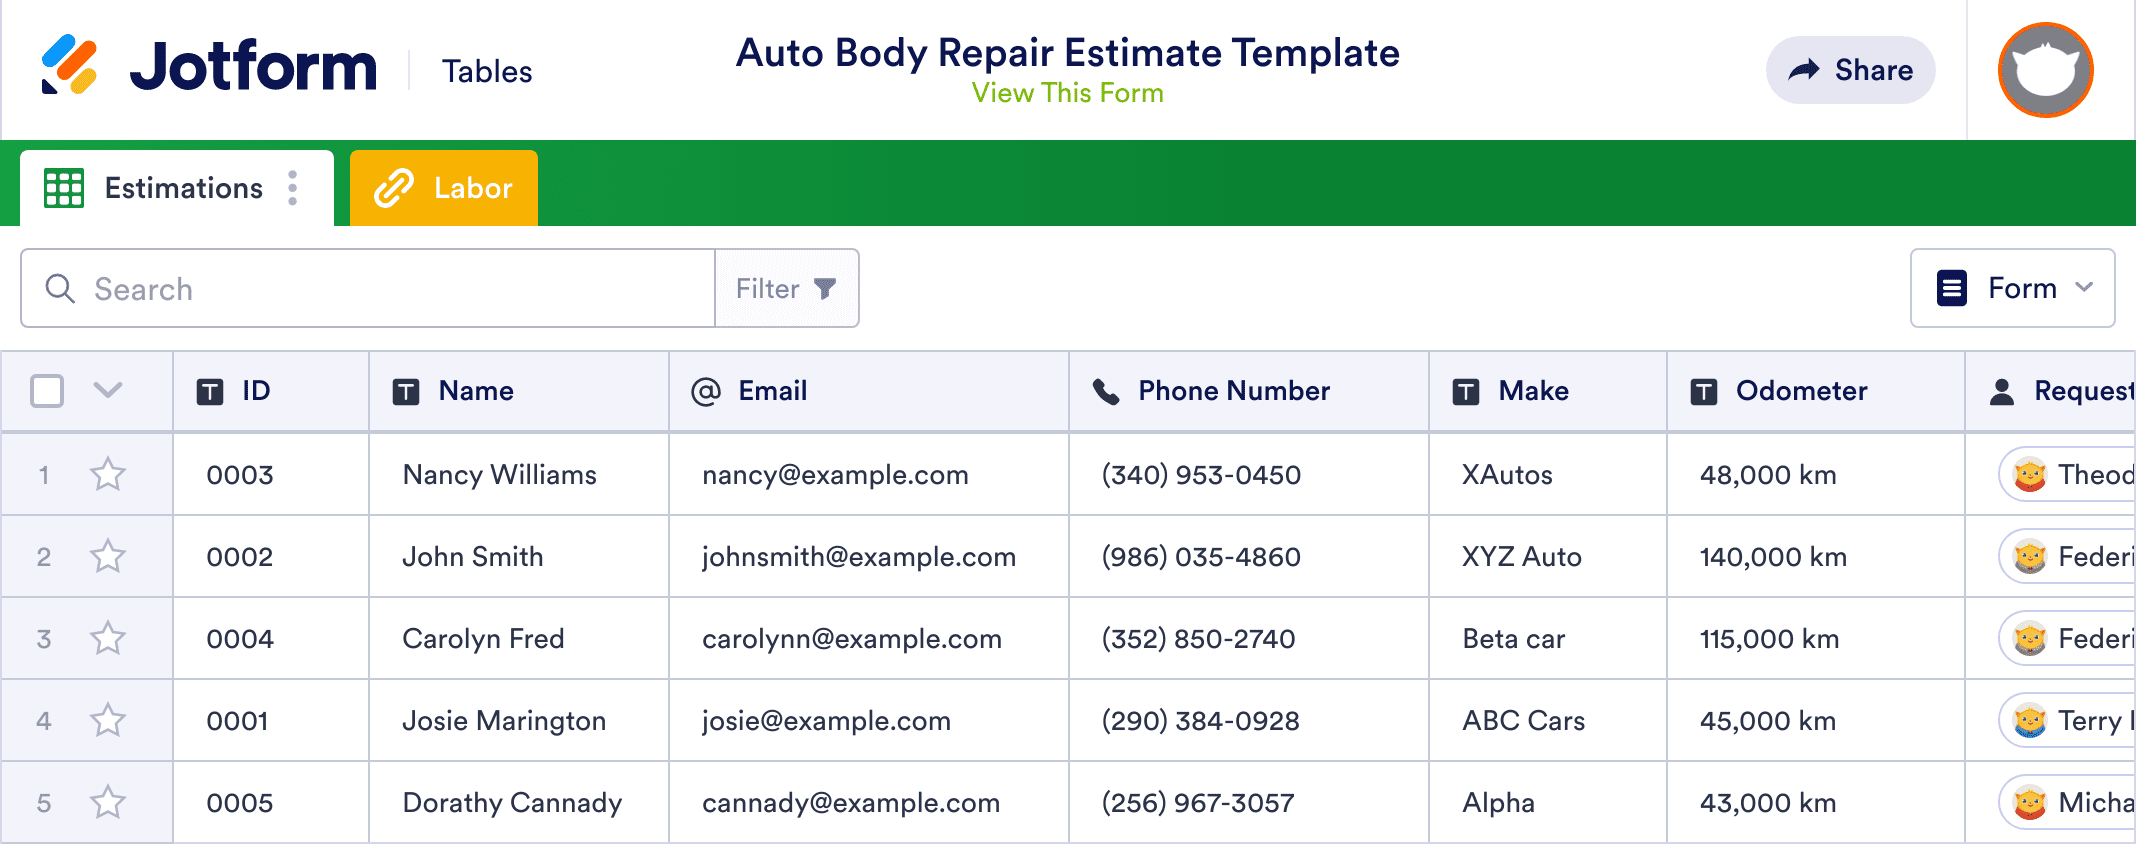 auto-body-repair-estimate-template-jotform-tables